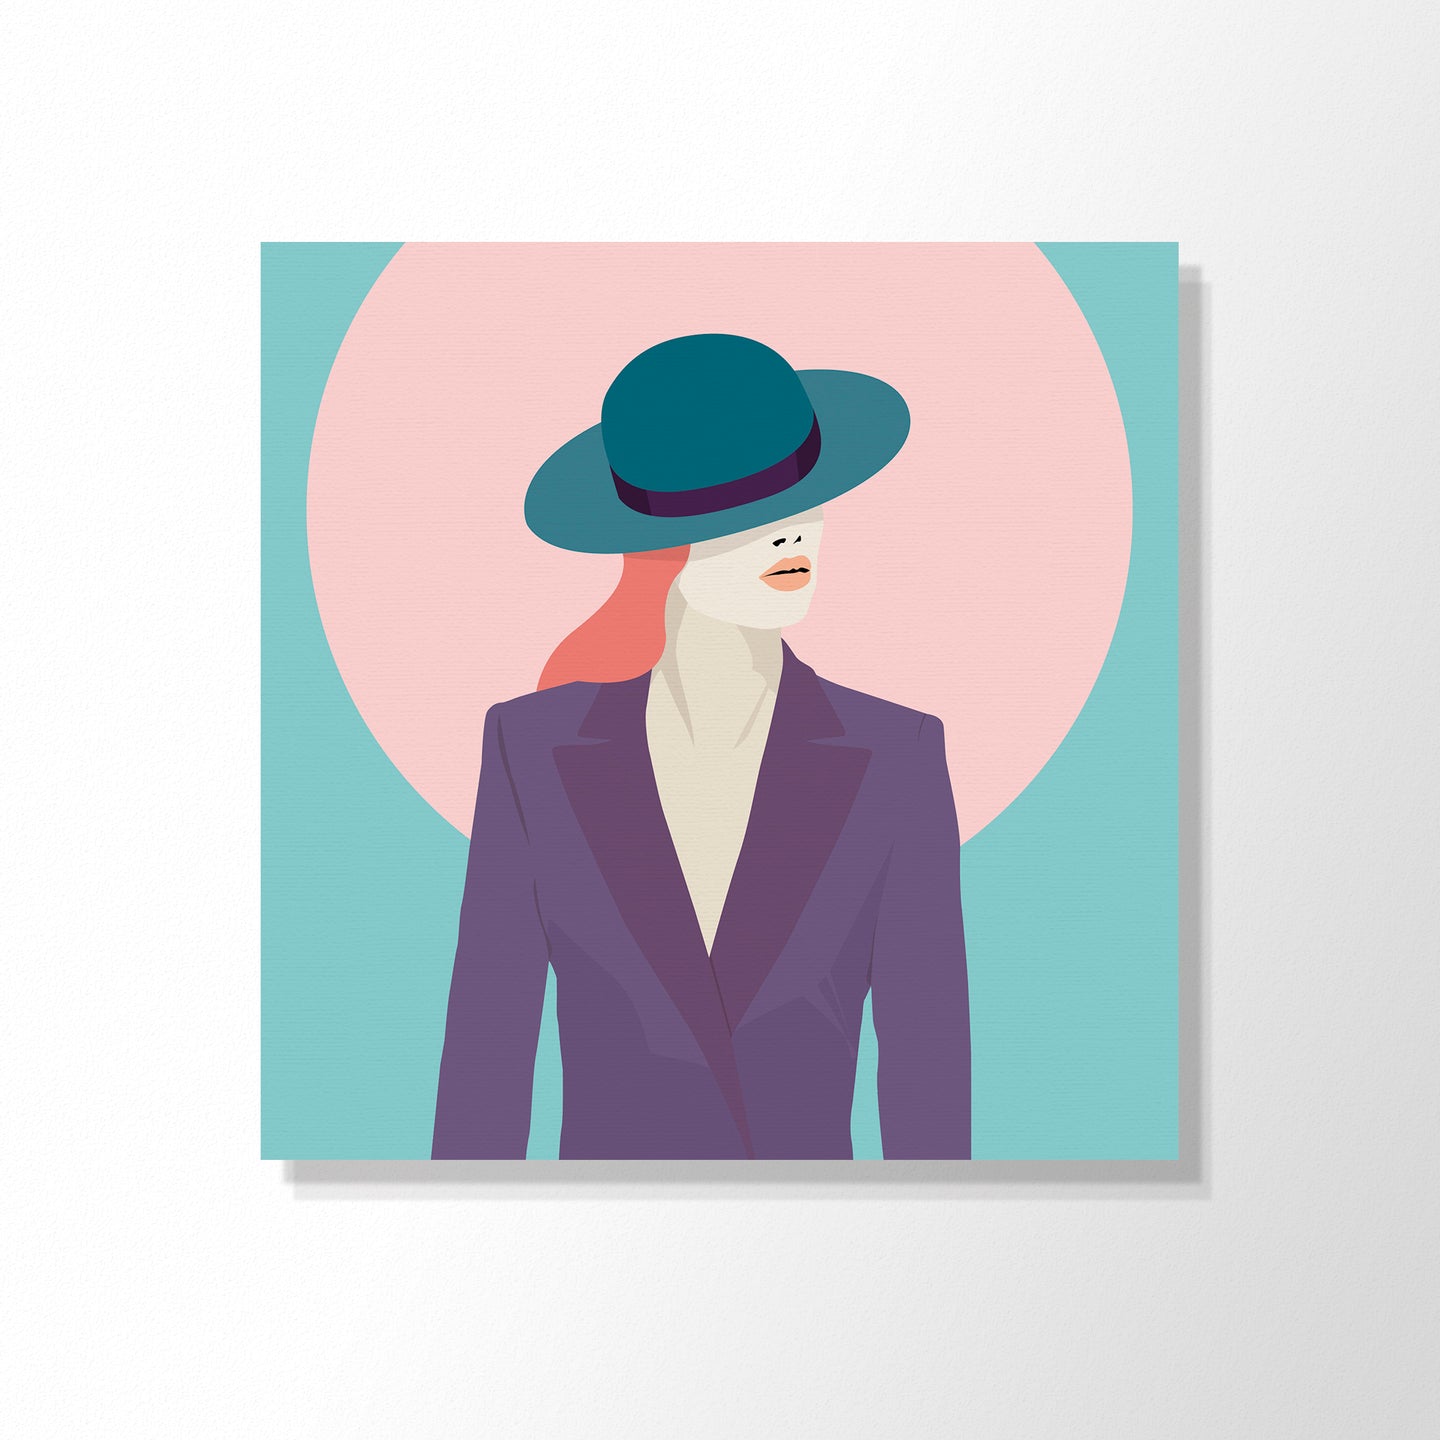 Cool Cats 3 - Stylish lady - purple jacket - green hat - reddish hair -pink circle - mint background